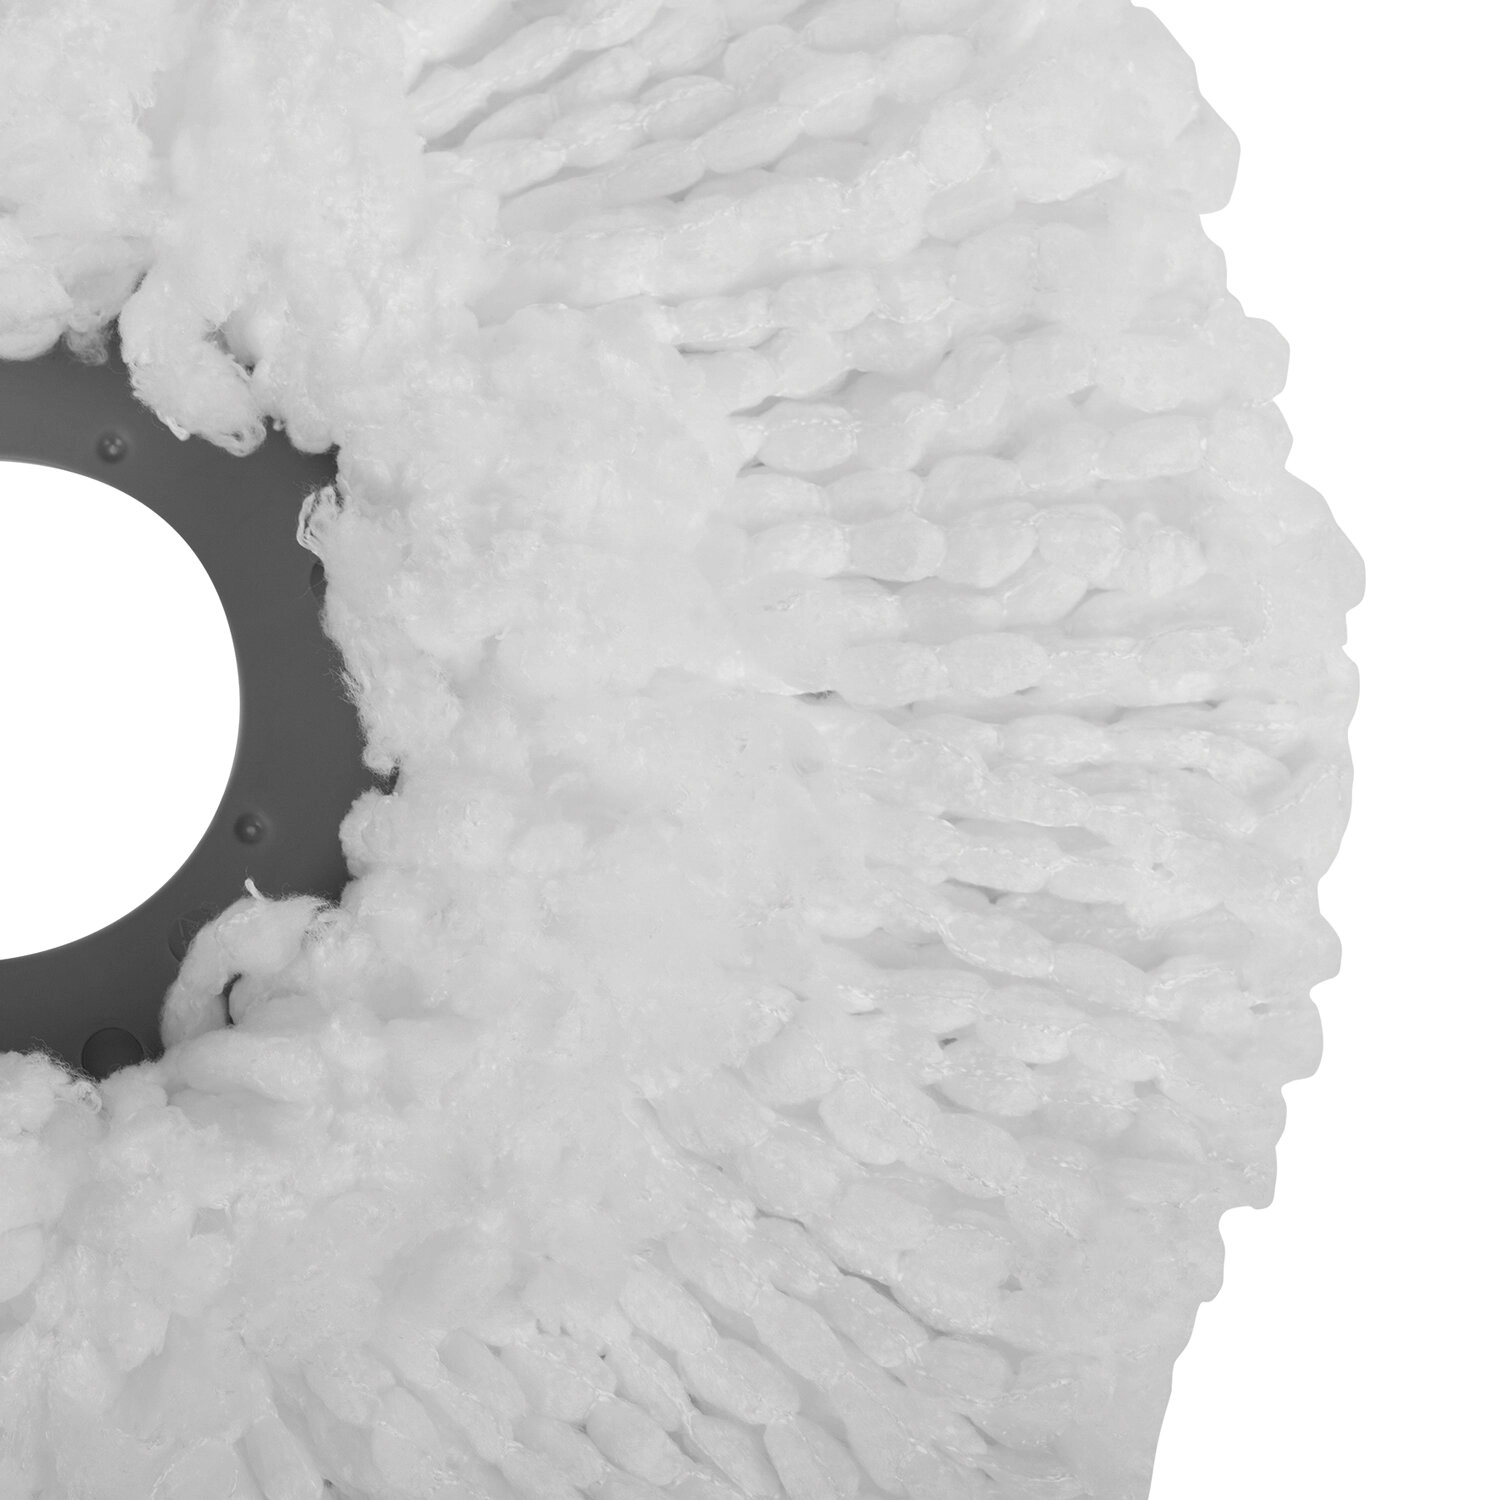 Насадка Моп из микрофибры для швабры Лайма круглая, диаметр 16 см